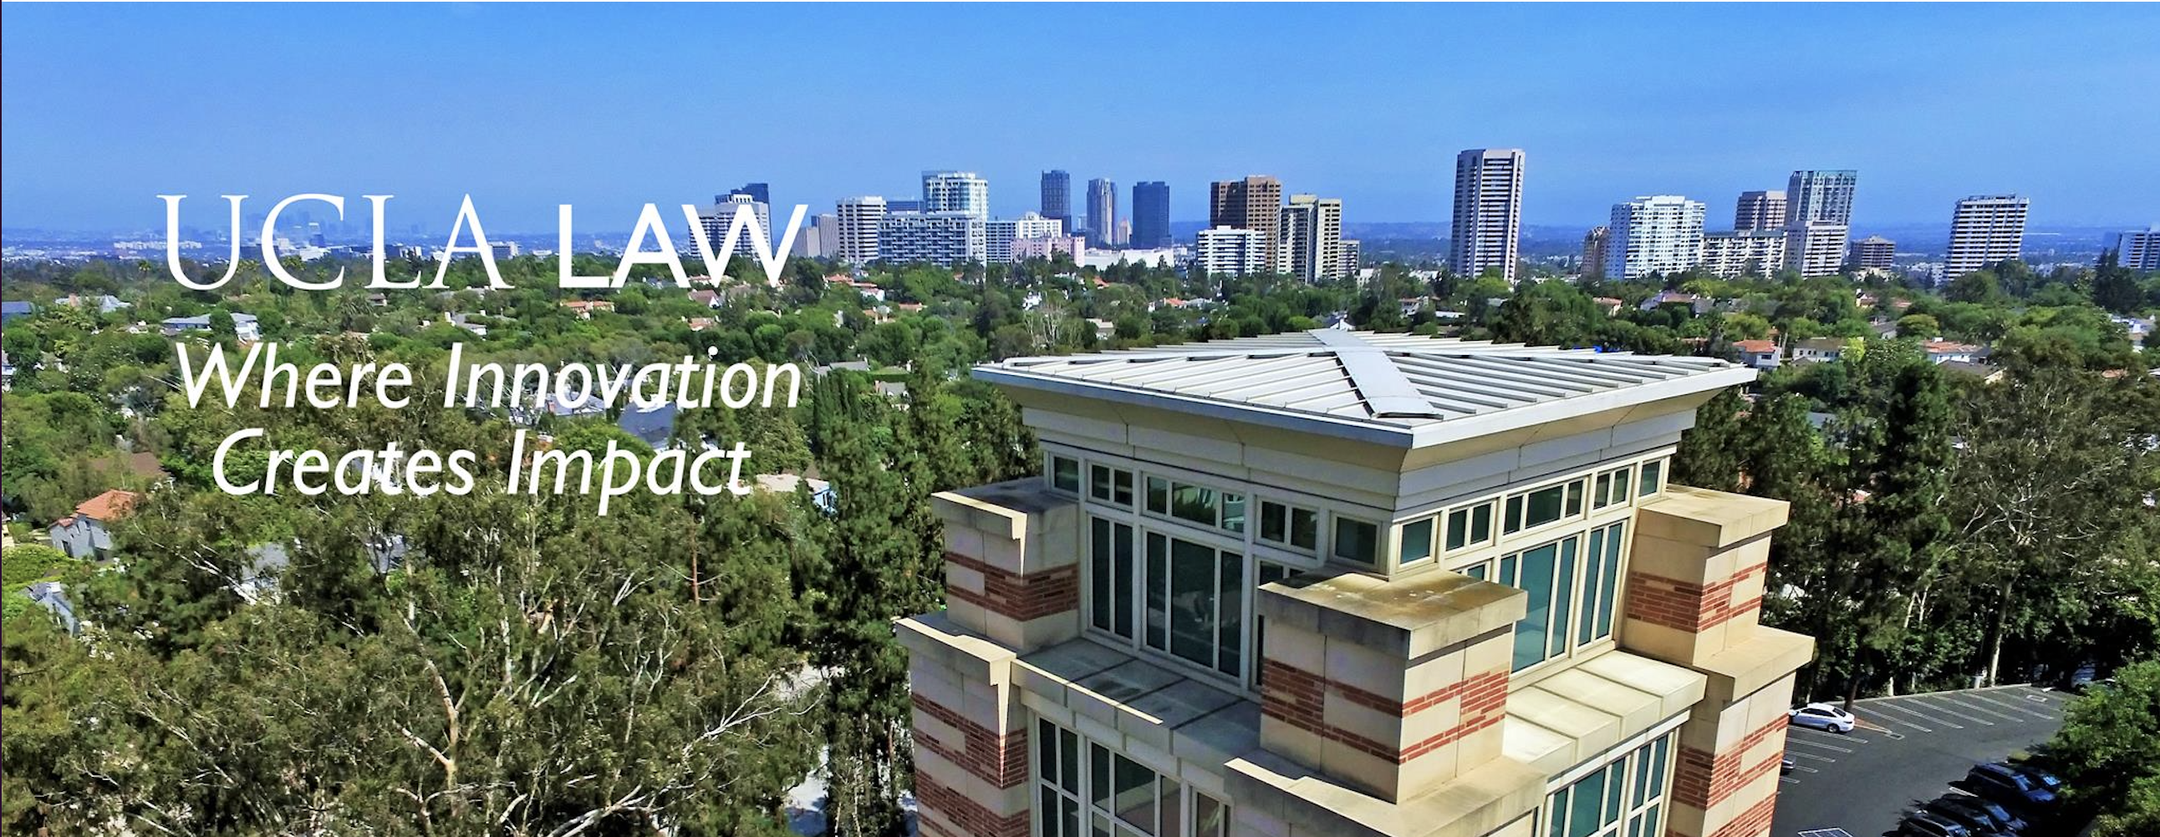 University of California, Los Angeles (UCLA) School of Law